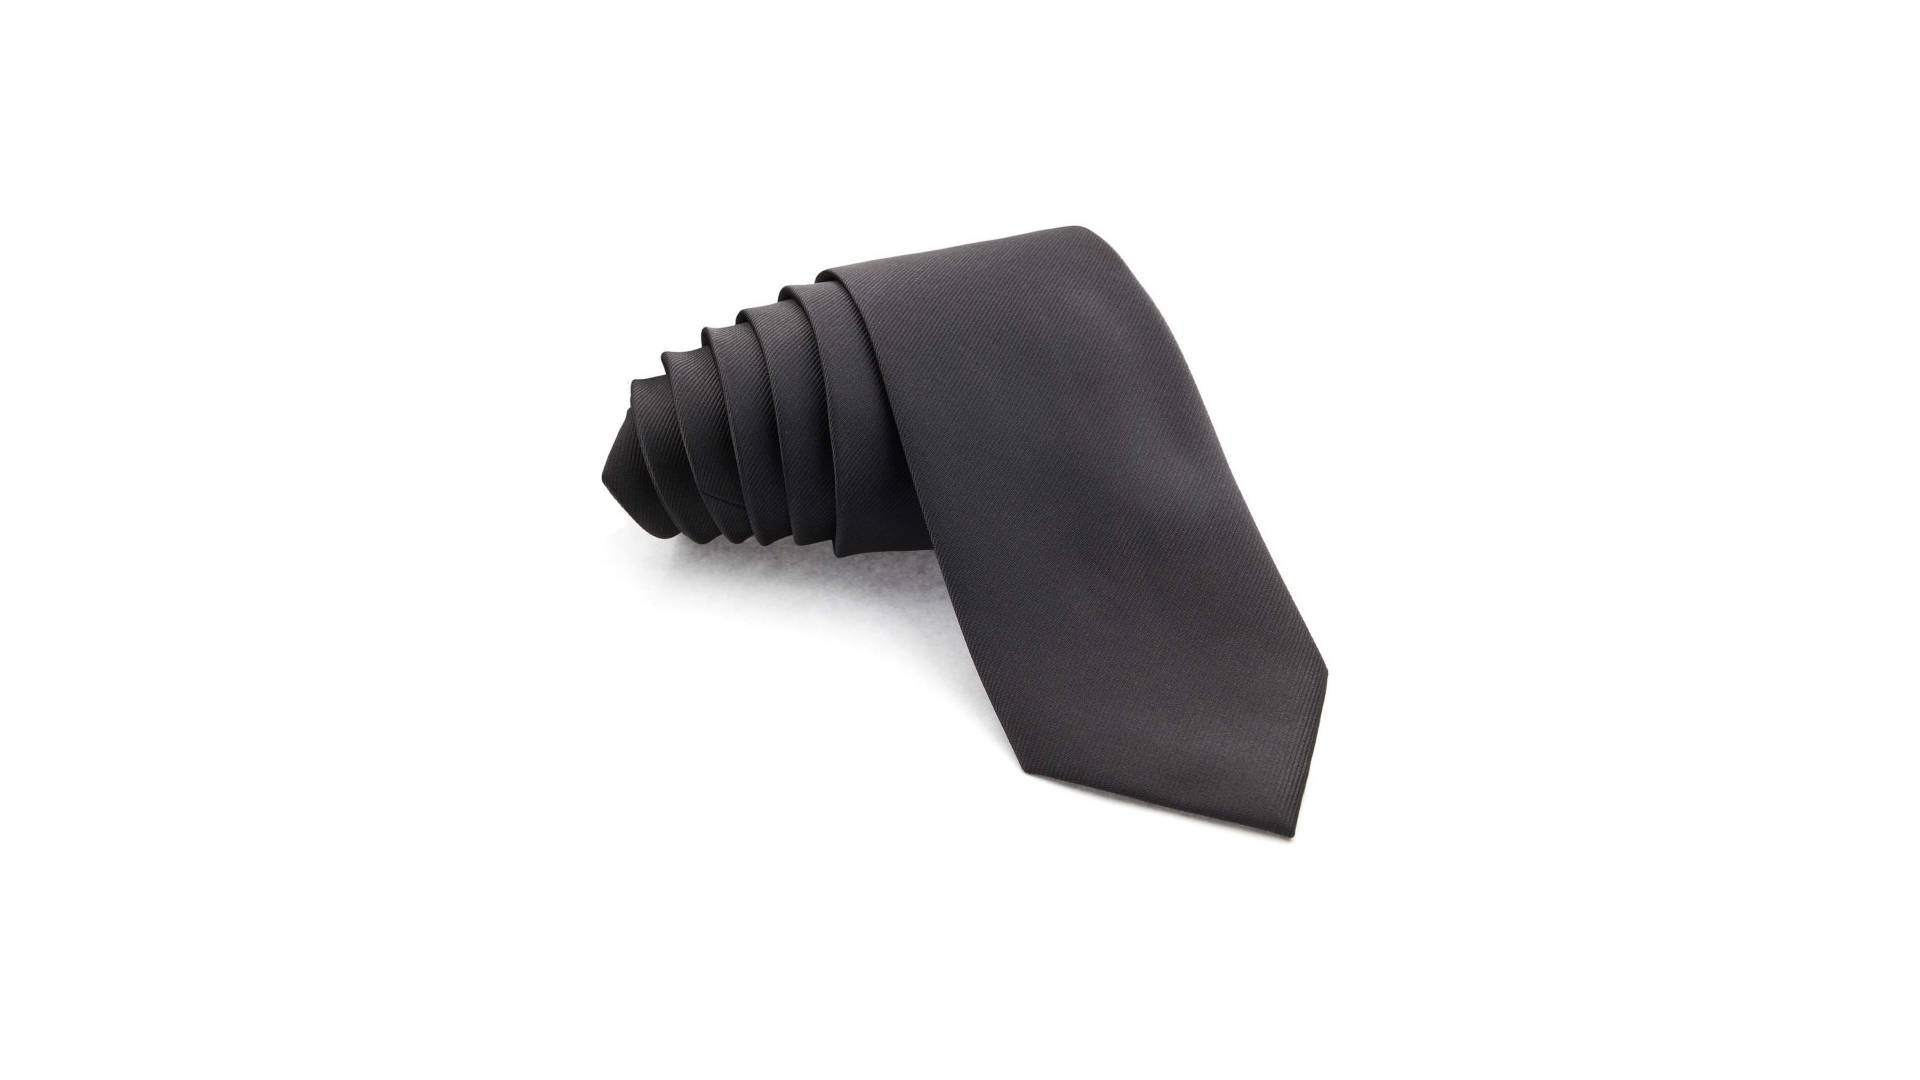 Outfit Corbata negra para hombre: ¿Qué significa?